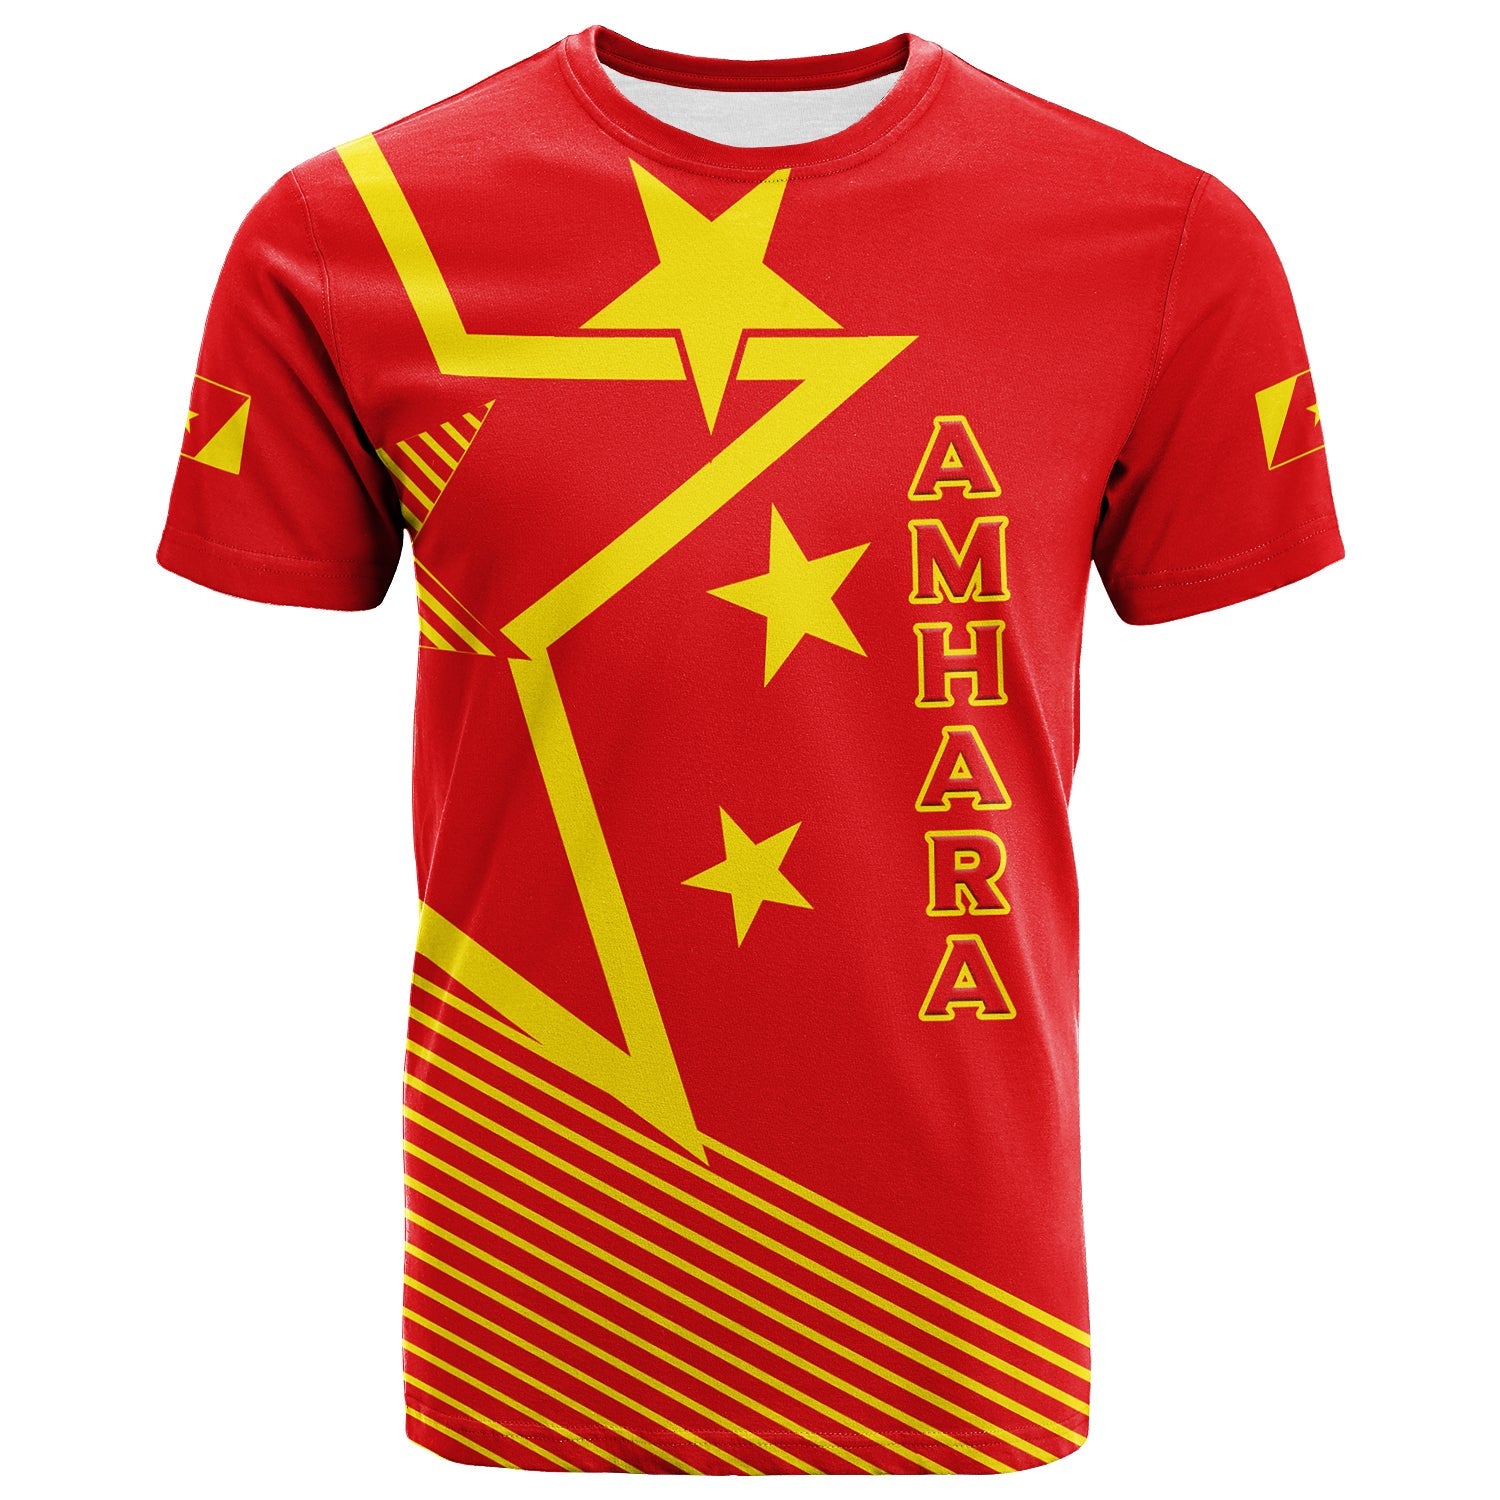 amhara-region-legend-ethiopia-t-shirt